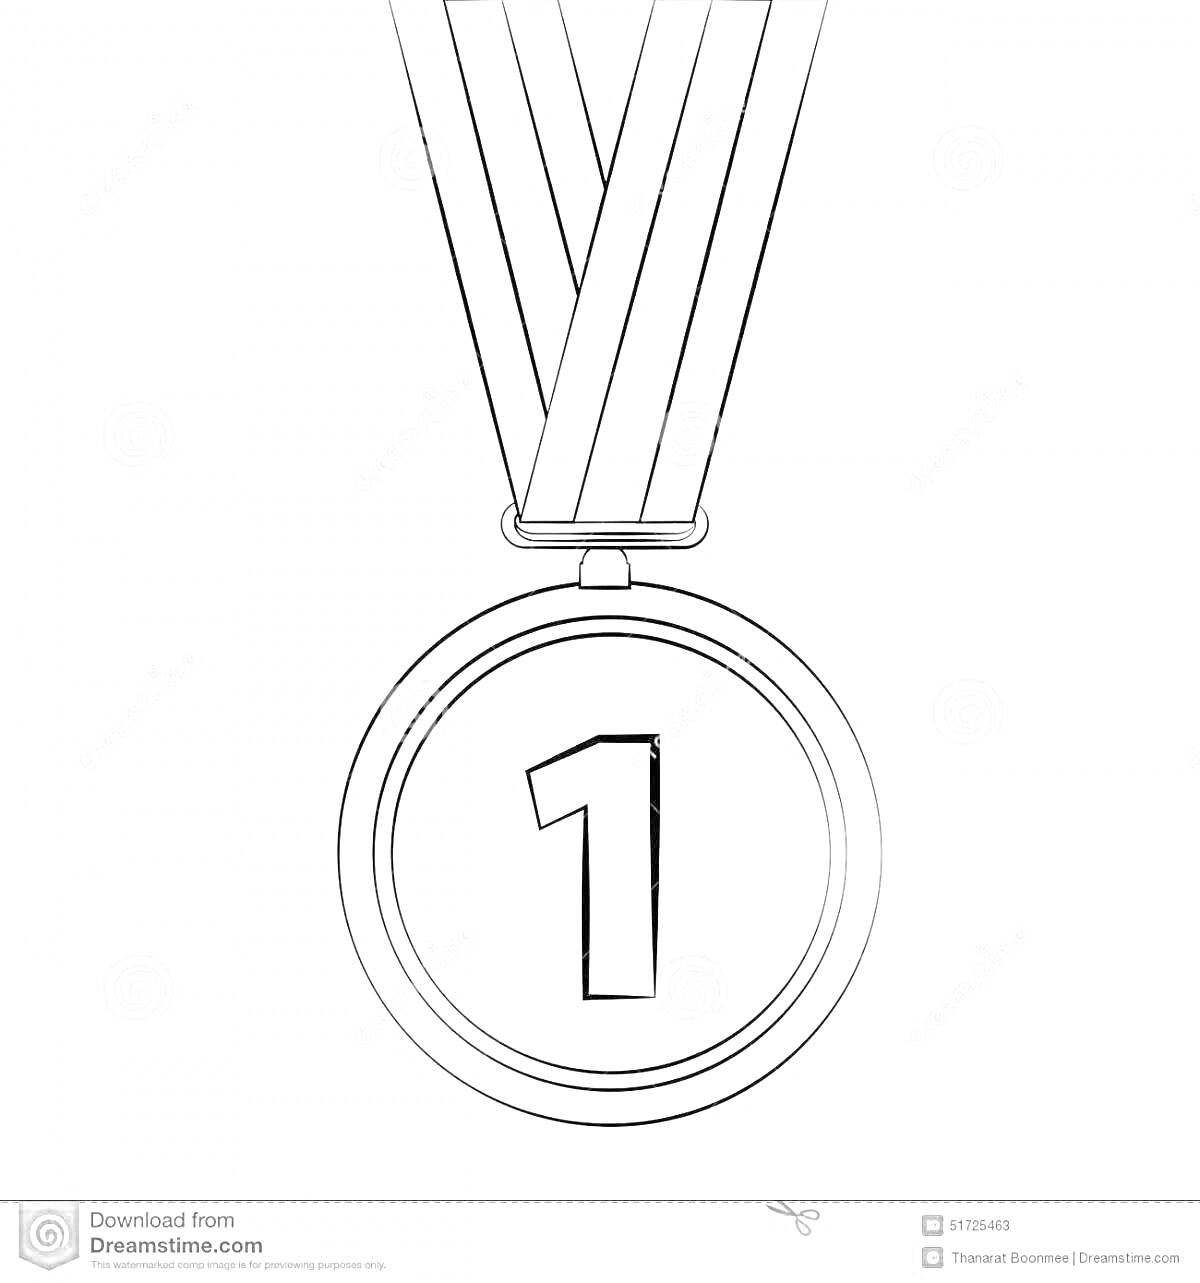 На раскраске изображено: Медаль, 1 место, Награда, Победа, Лента, Первое место